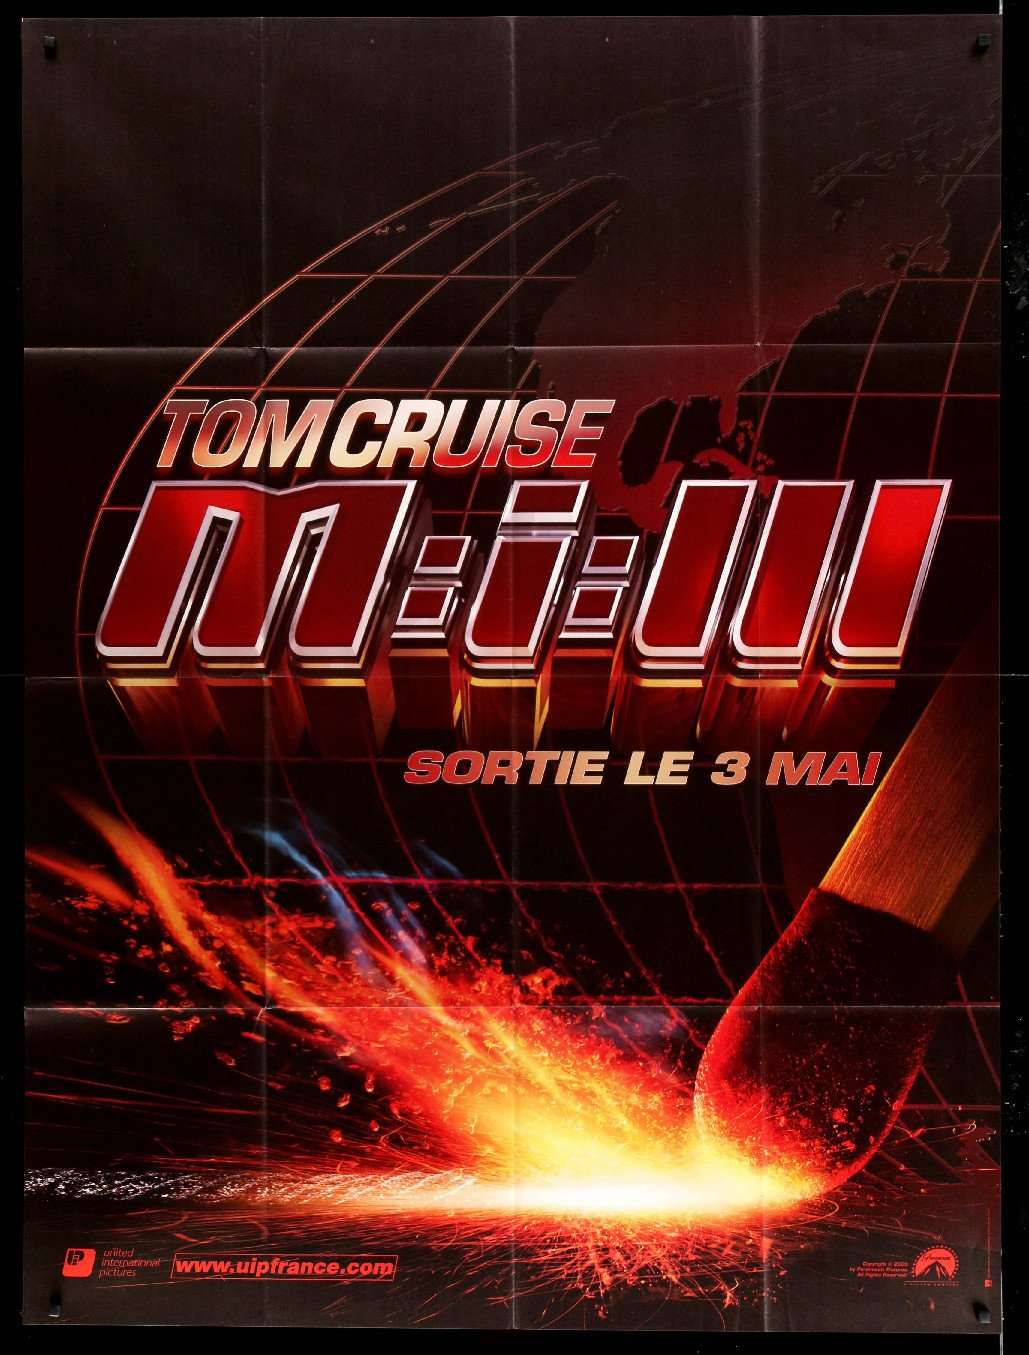 Mission Impossible 3 (2006) original movie poster for sale at Original Film Art